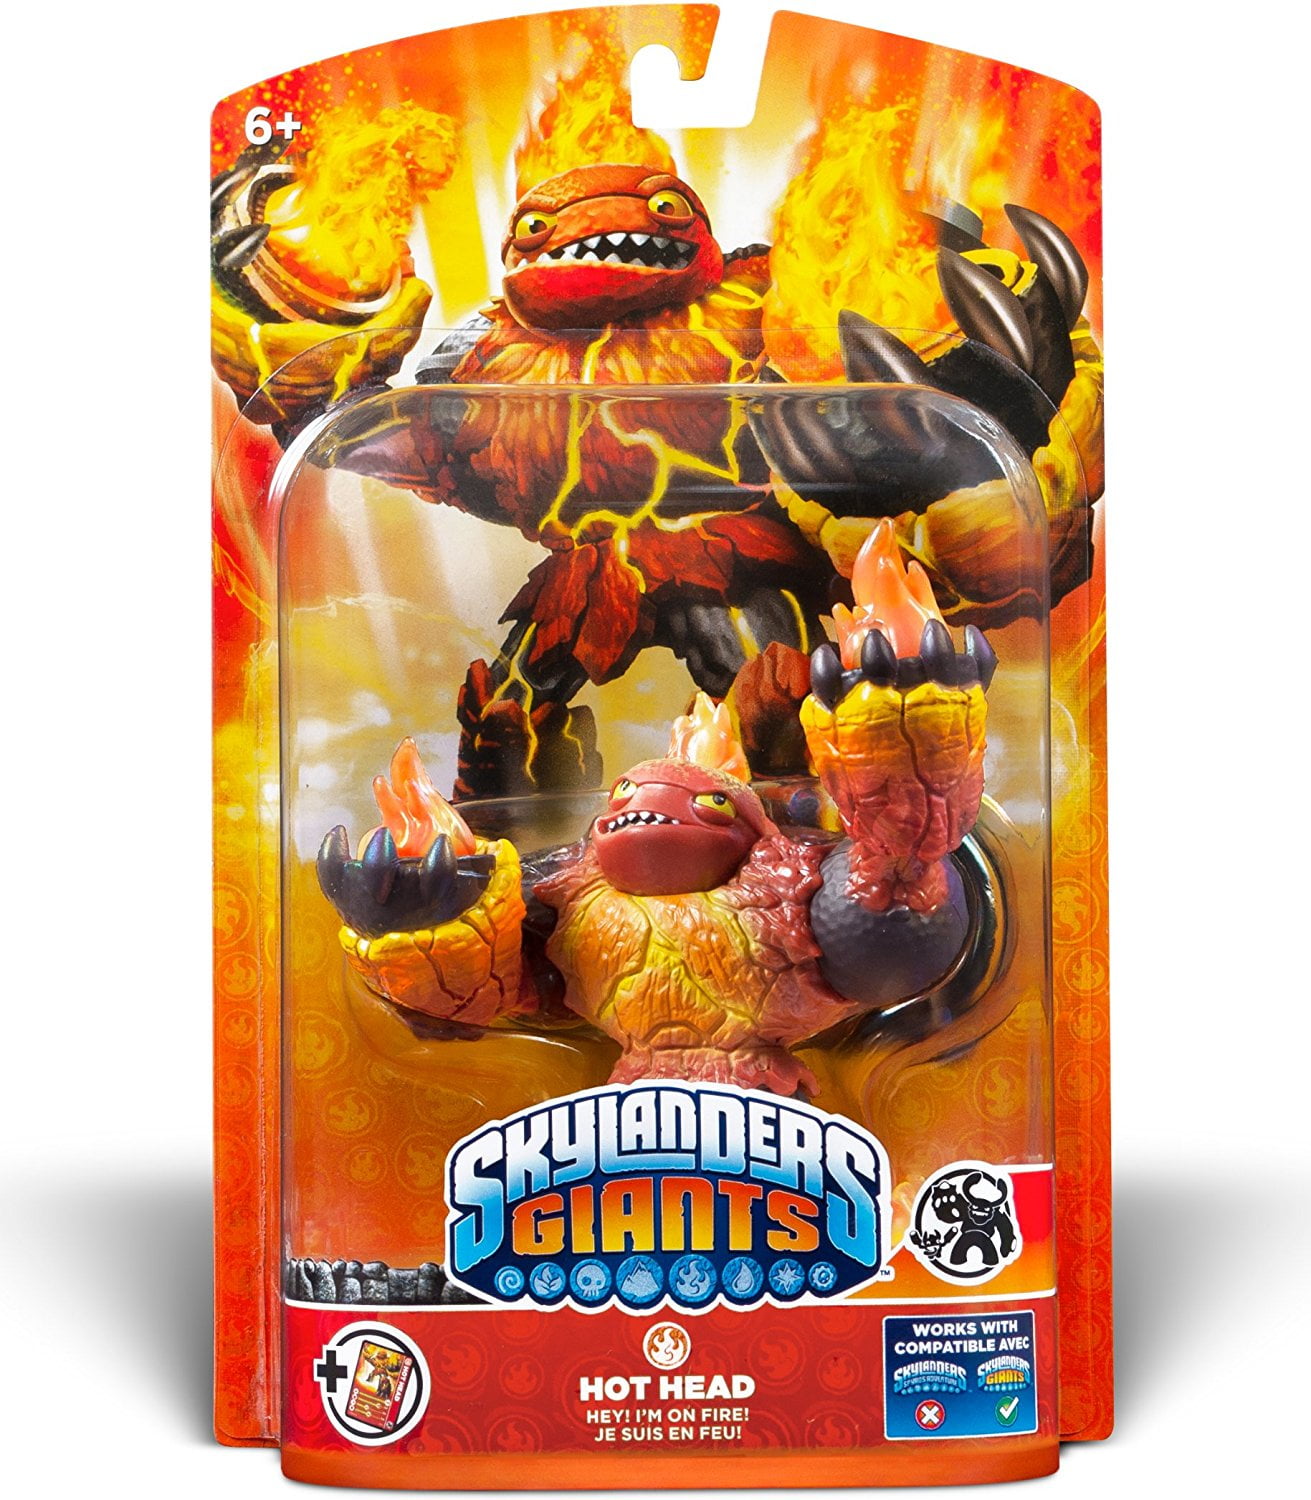  Skylanders  Giants  Hot Head Giants  Character  Walmart com 